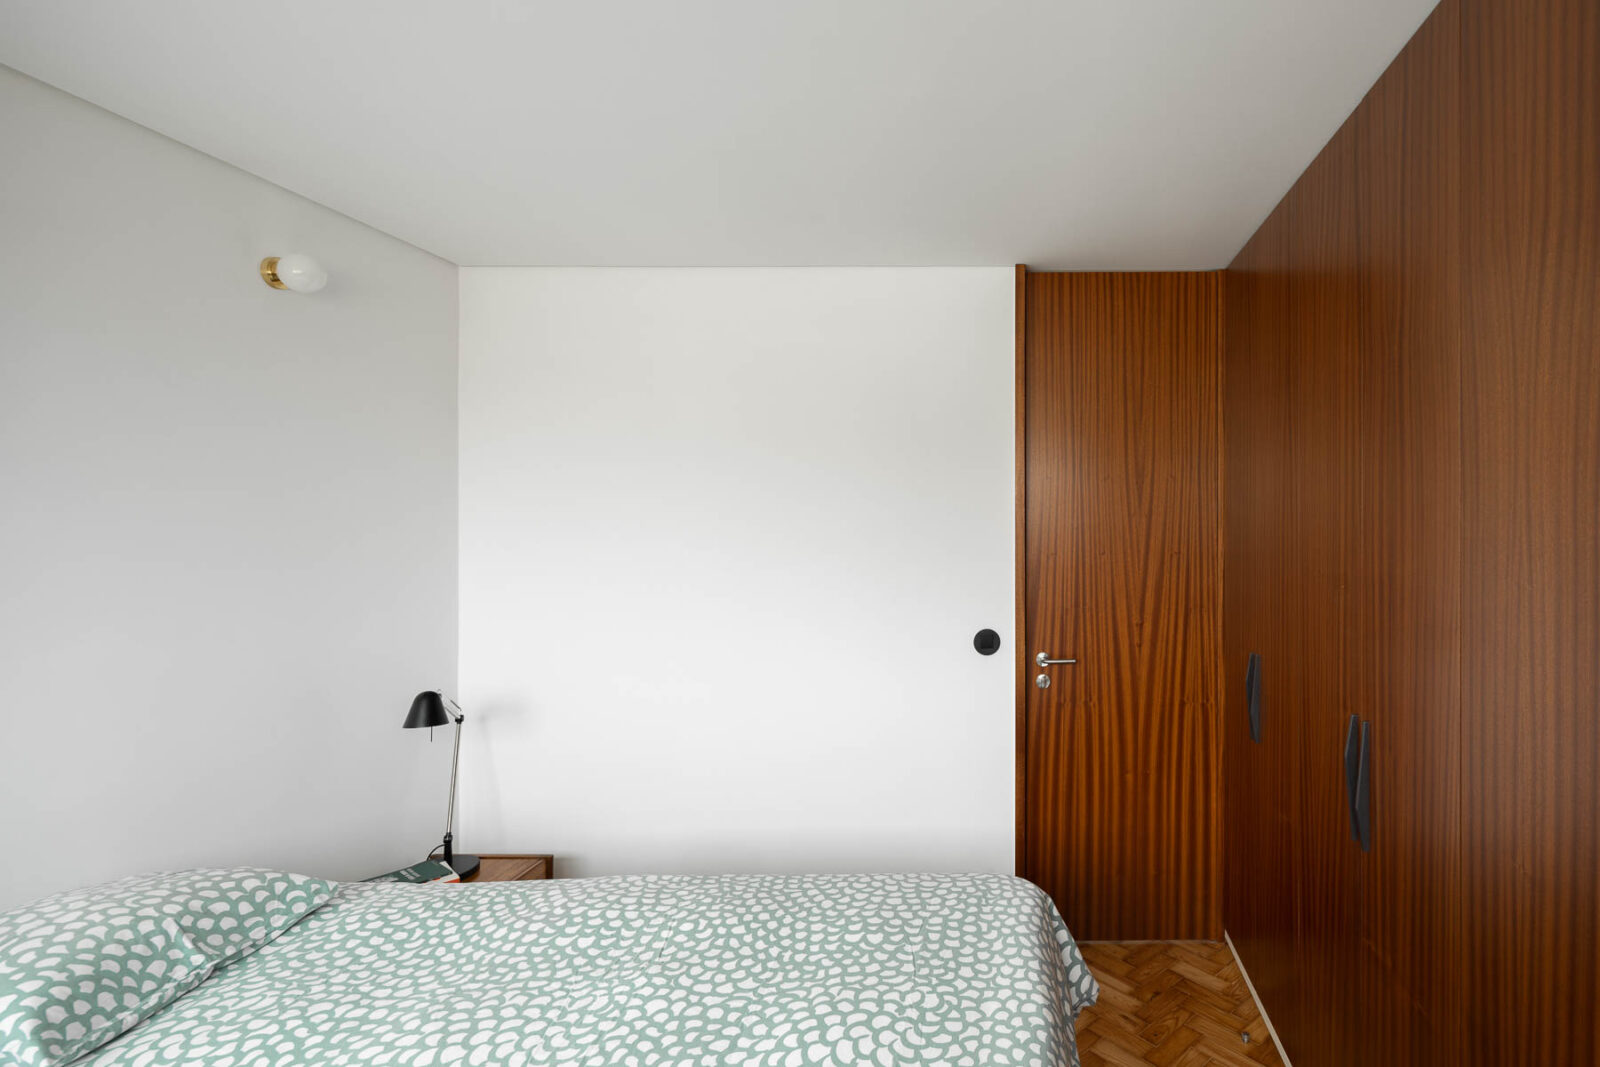 Archisearch Santos Pousada Apartment in Porto, Portugal | Hinterland Architecture Studio